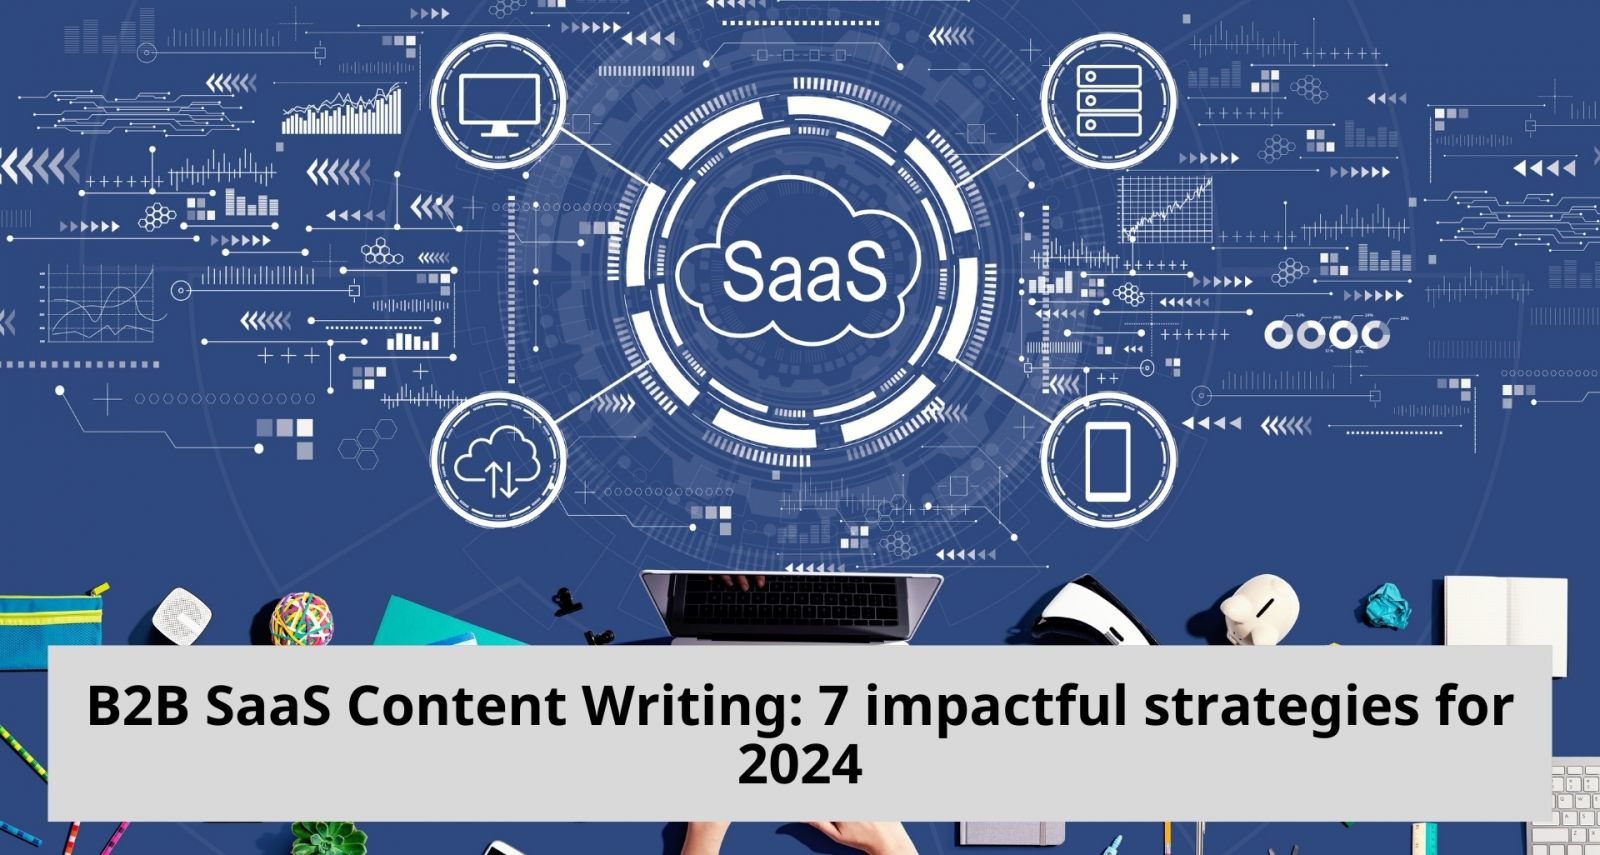 B2B SaaS Content Writing: 7 impactful strategies for 2024